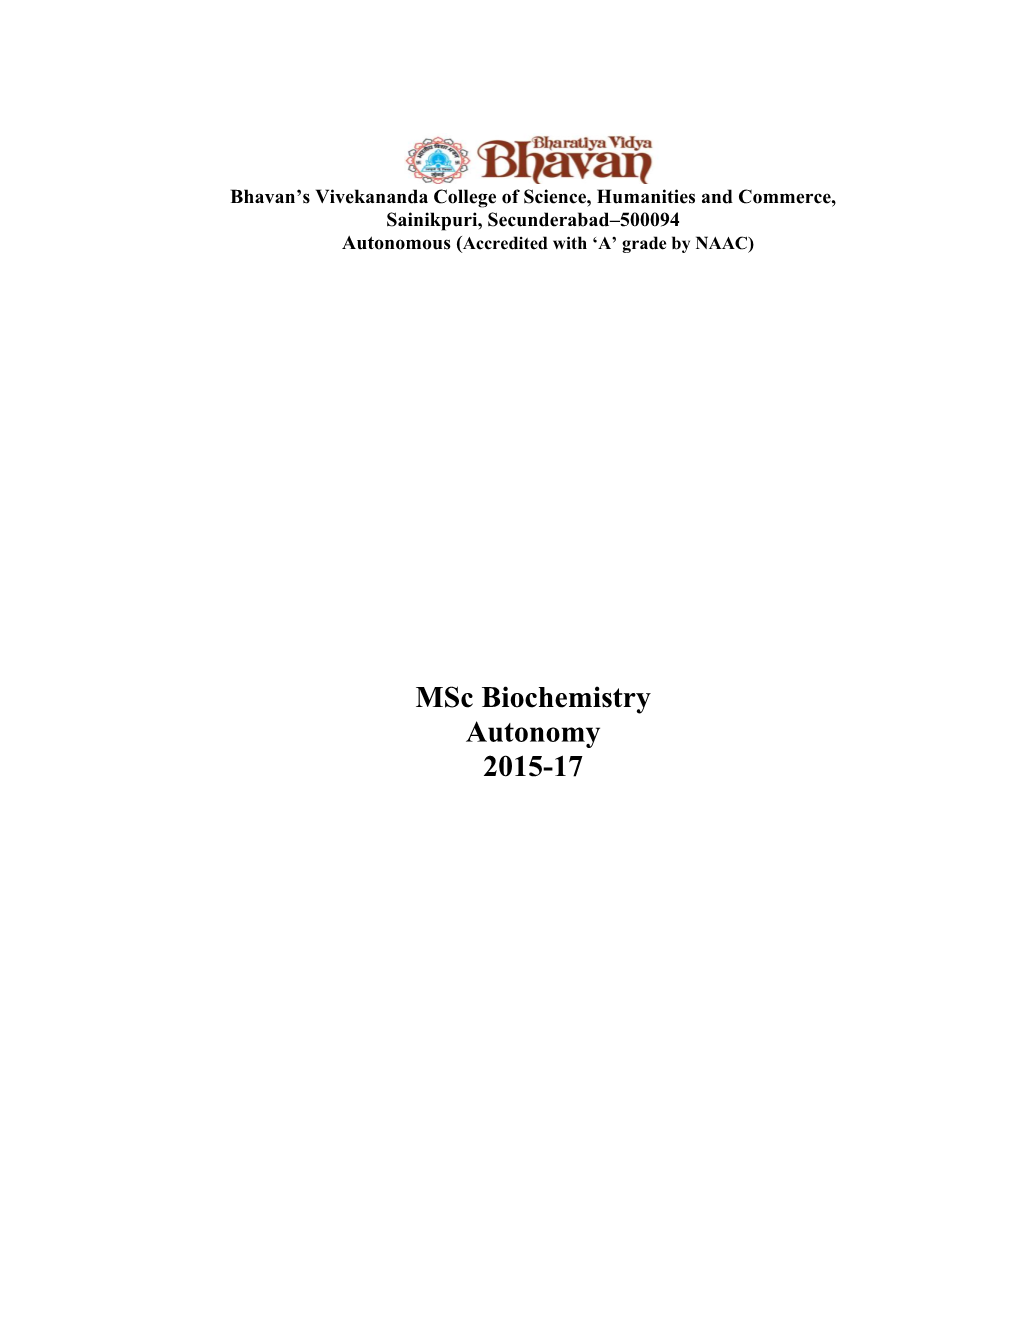 Msc Biochemistry Autonomy 2015-17